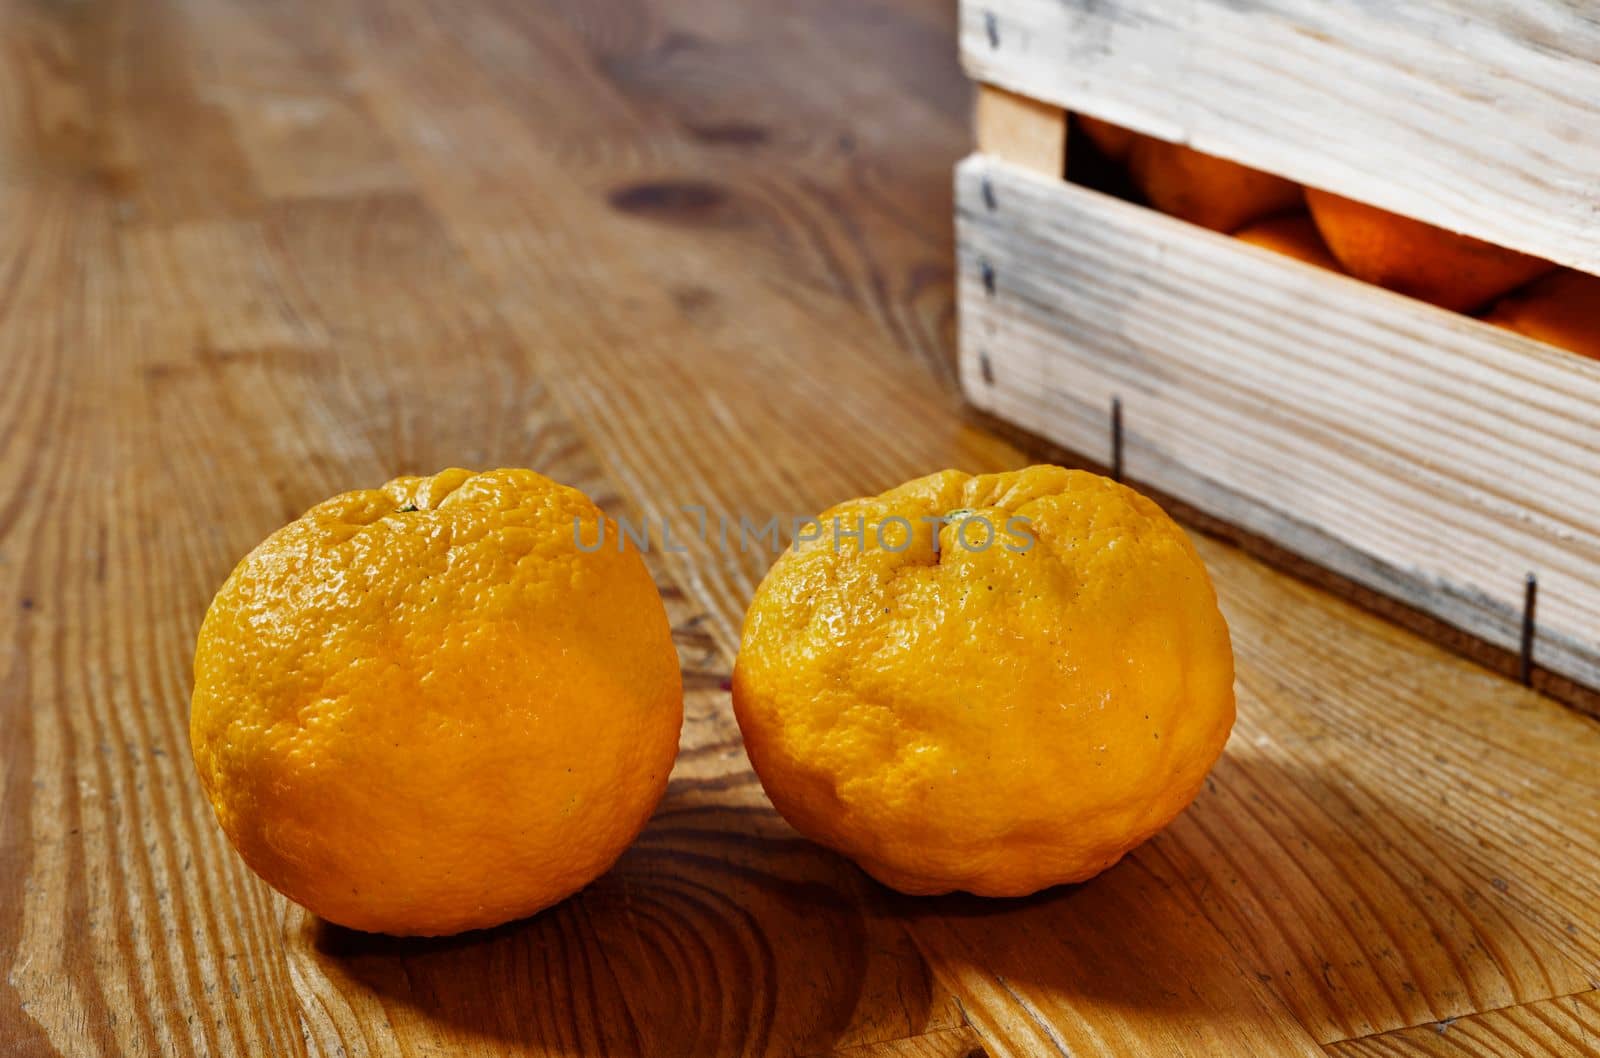 Fresh oranges on wooden table by victimewalker